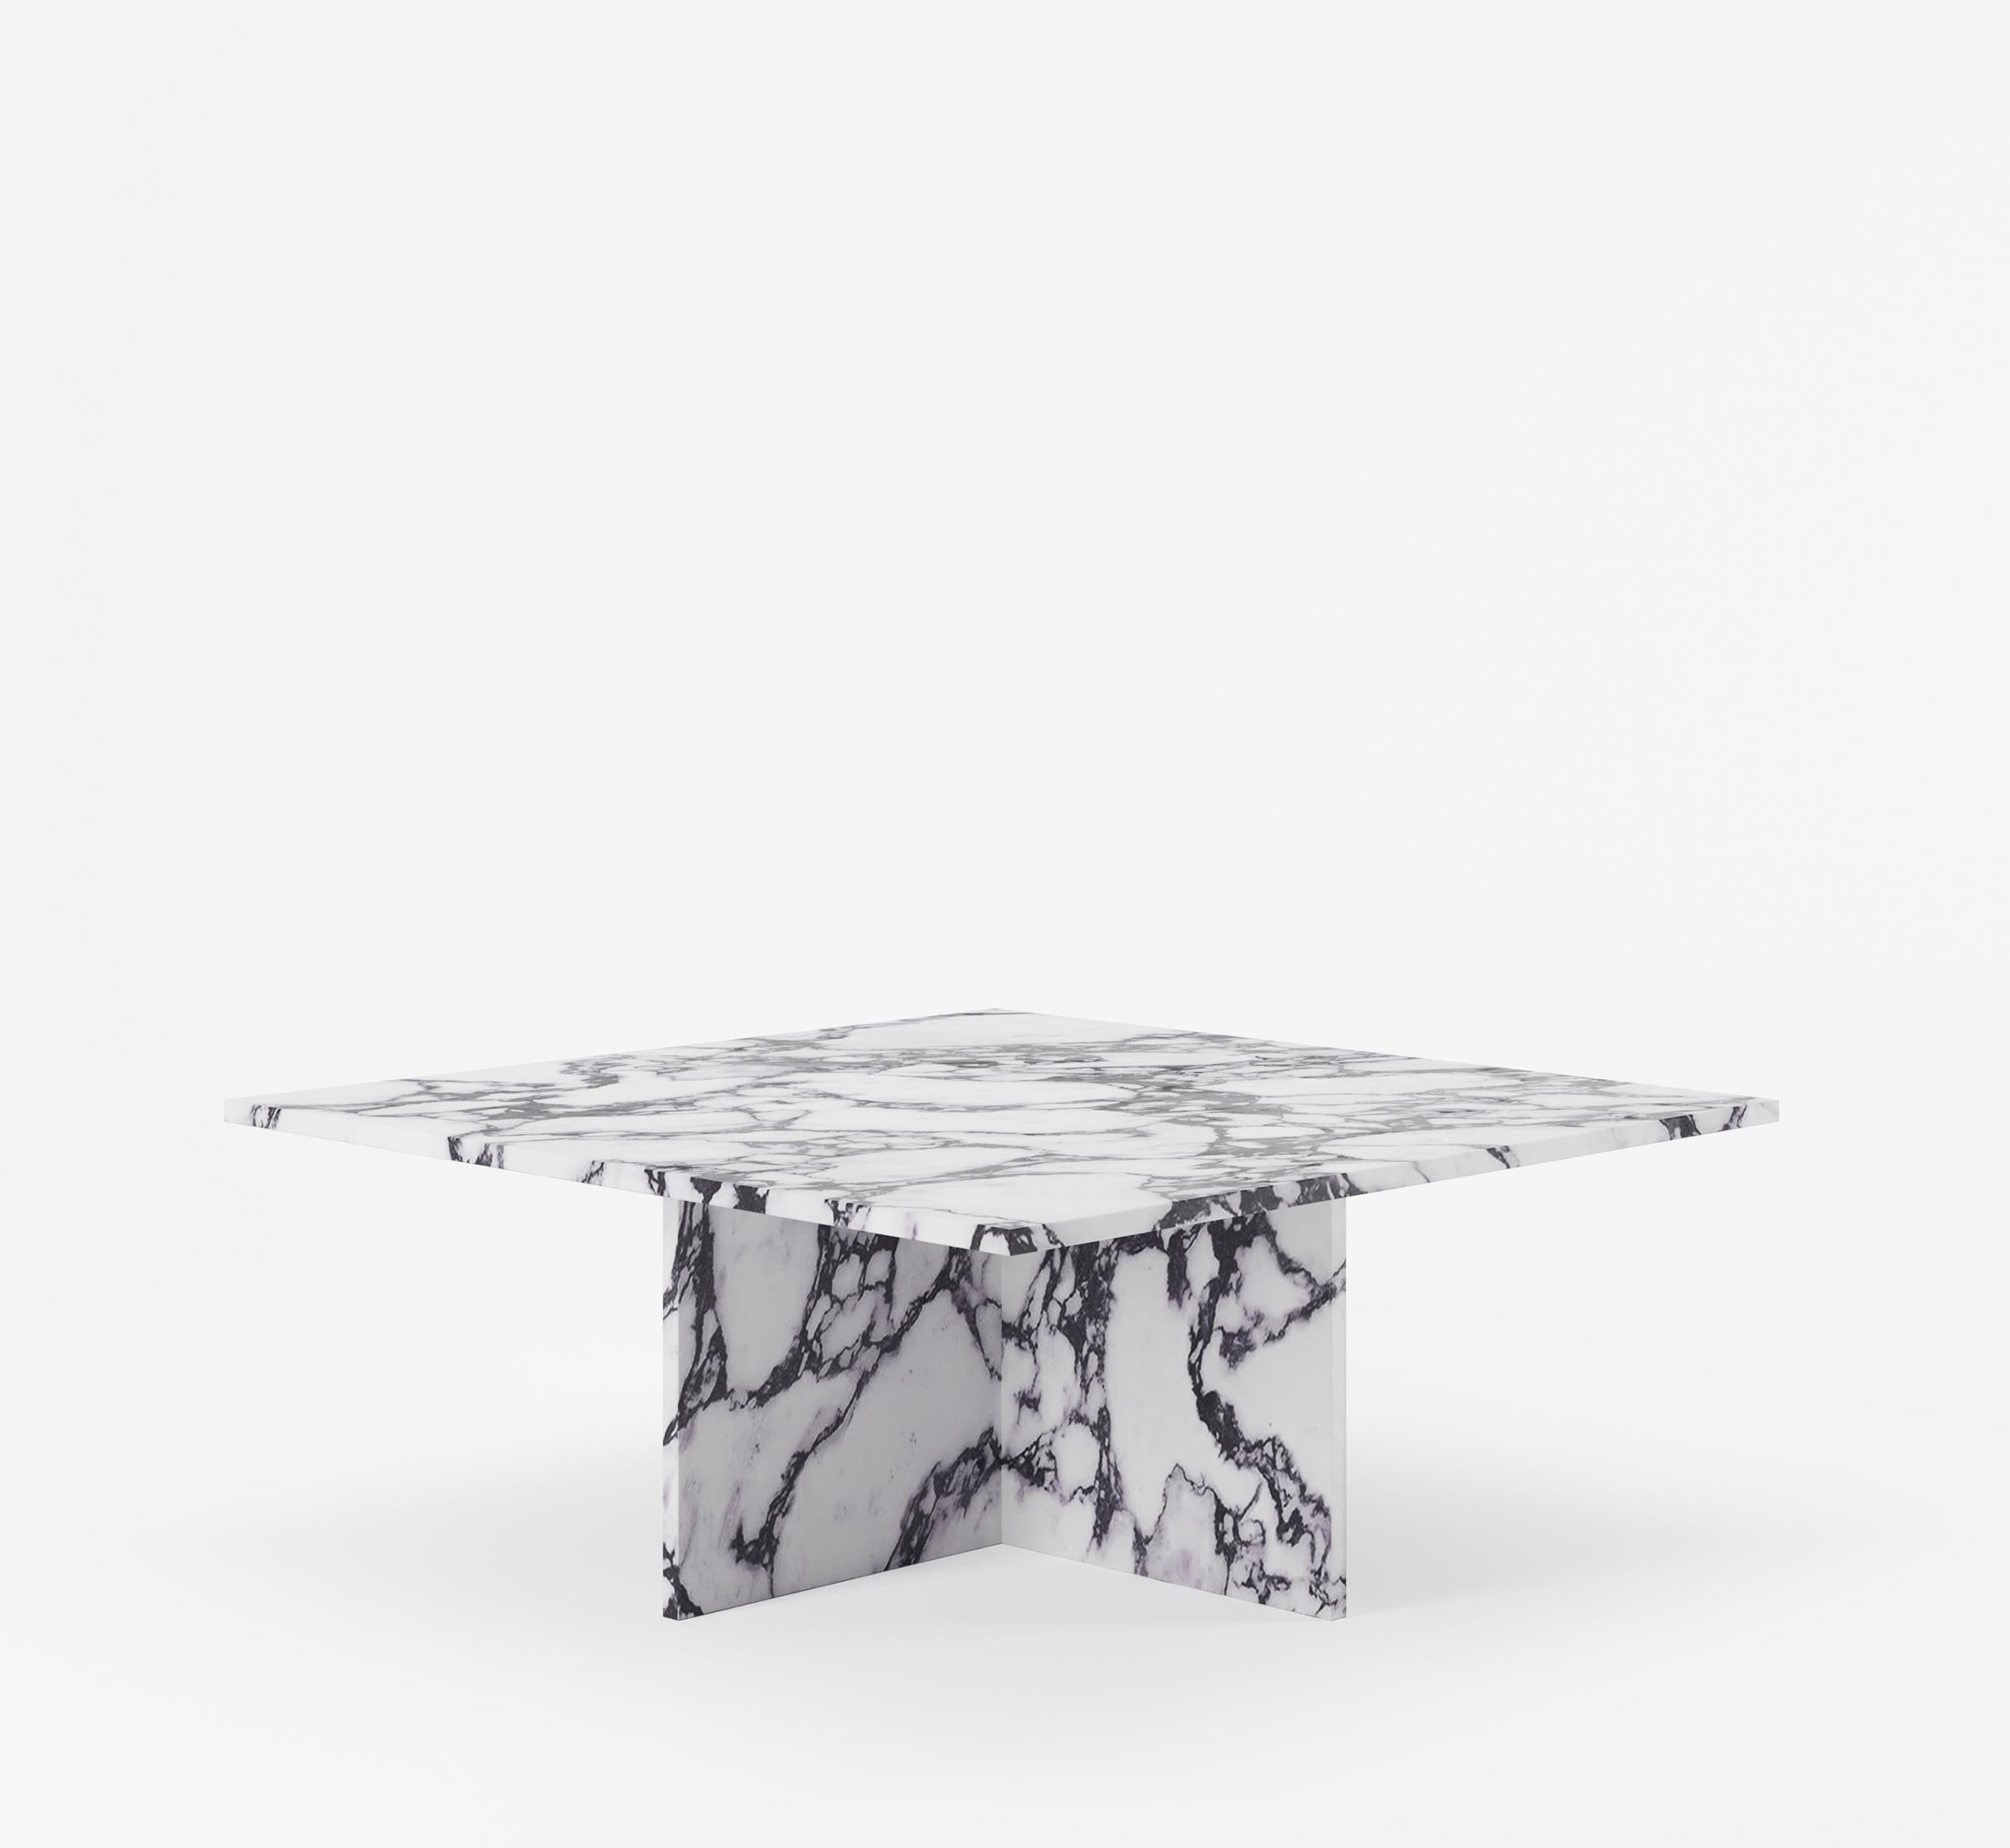 Minimalist Vondel Square Table Handcrafted in Calacatta Viola